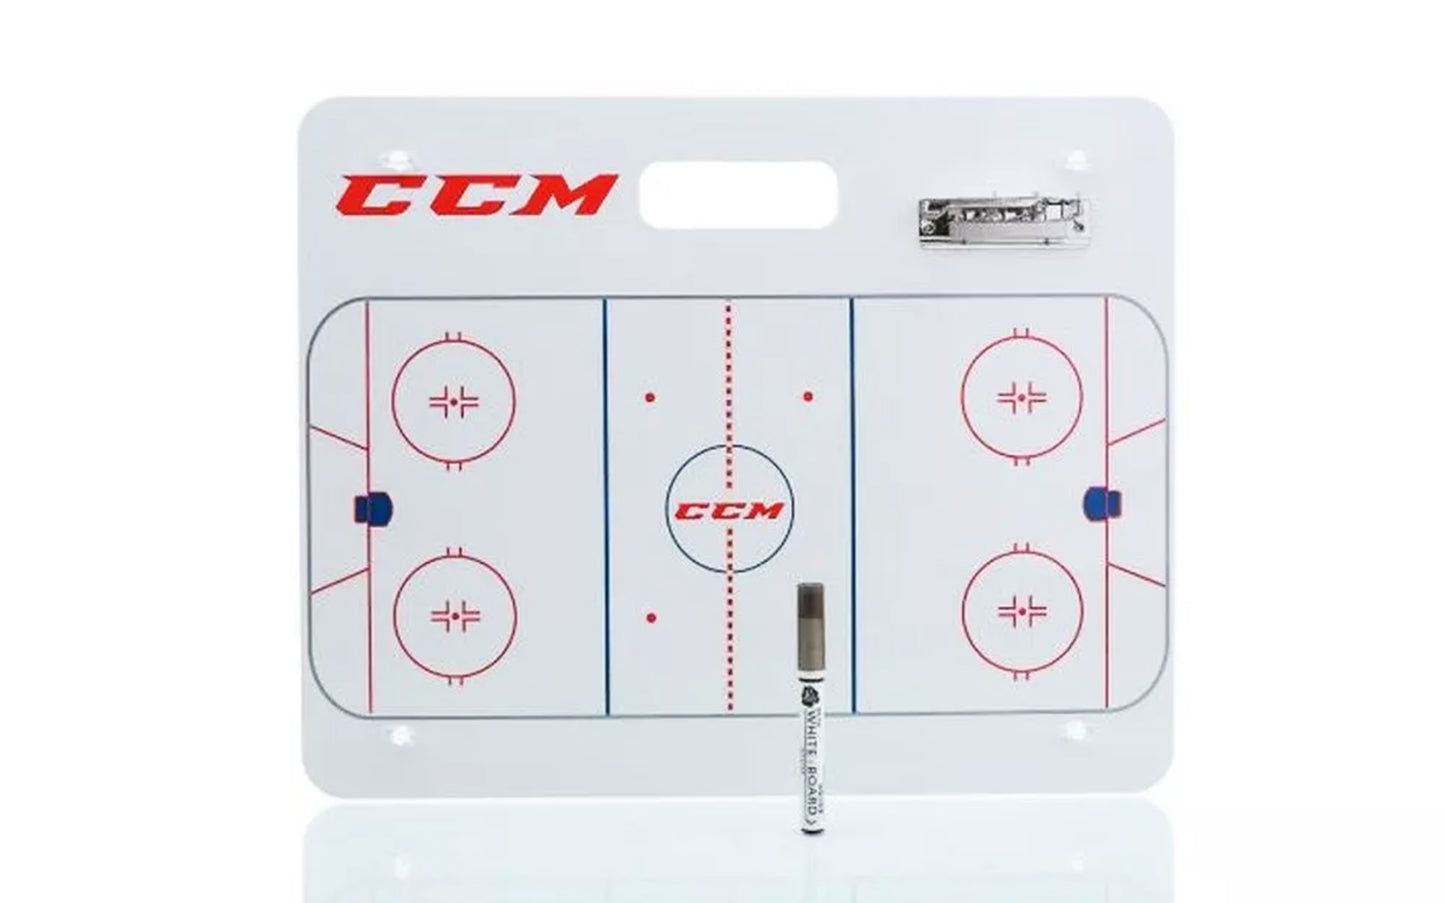 CCM coaching board tactics board ice hockey 51 x 41 cm